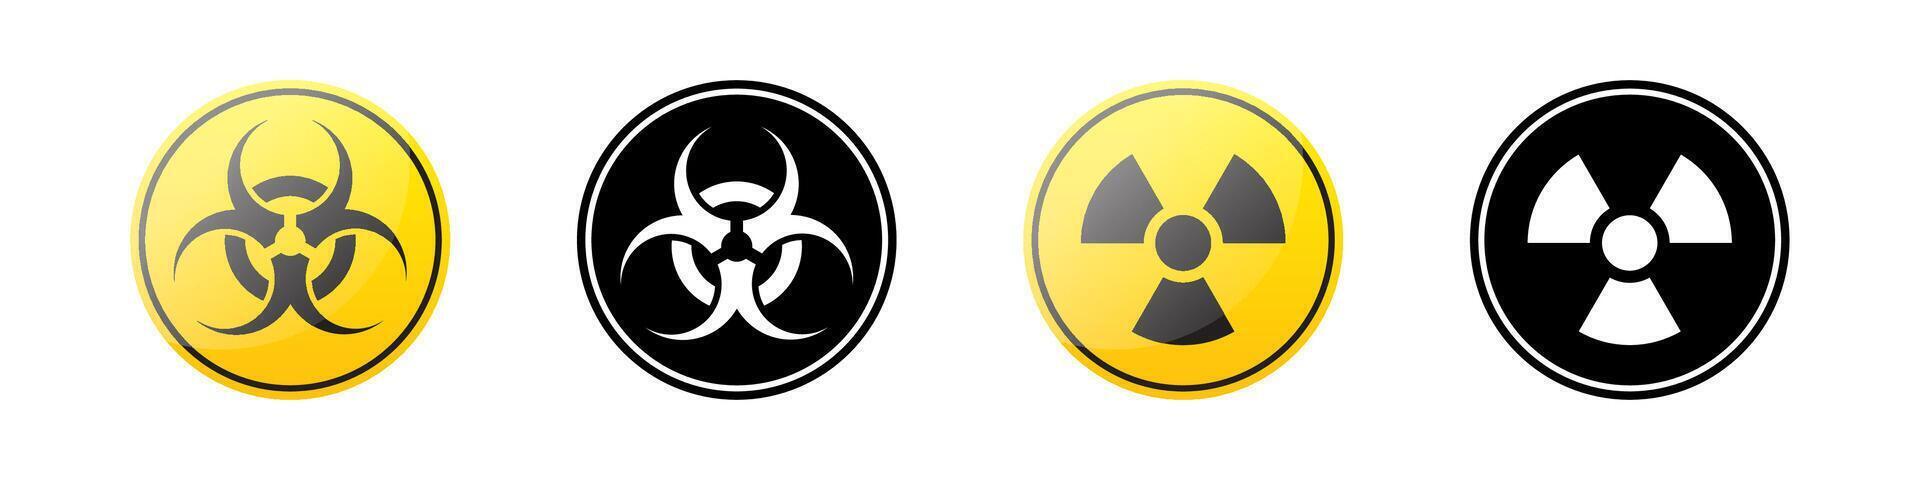 Radiation symbols. Radiation hazard. Radioactive icons. vector